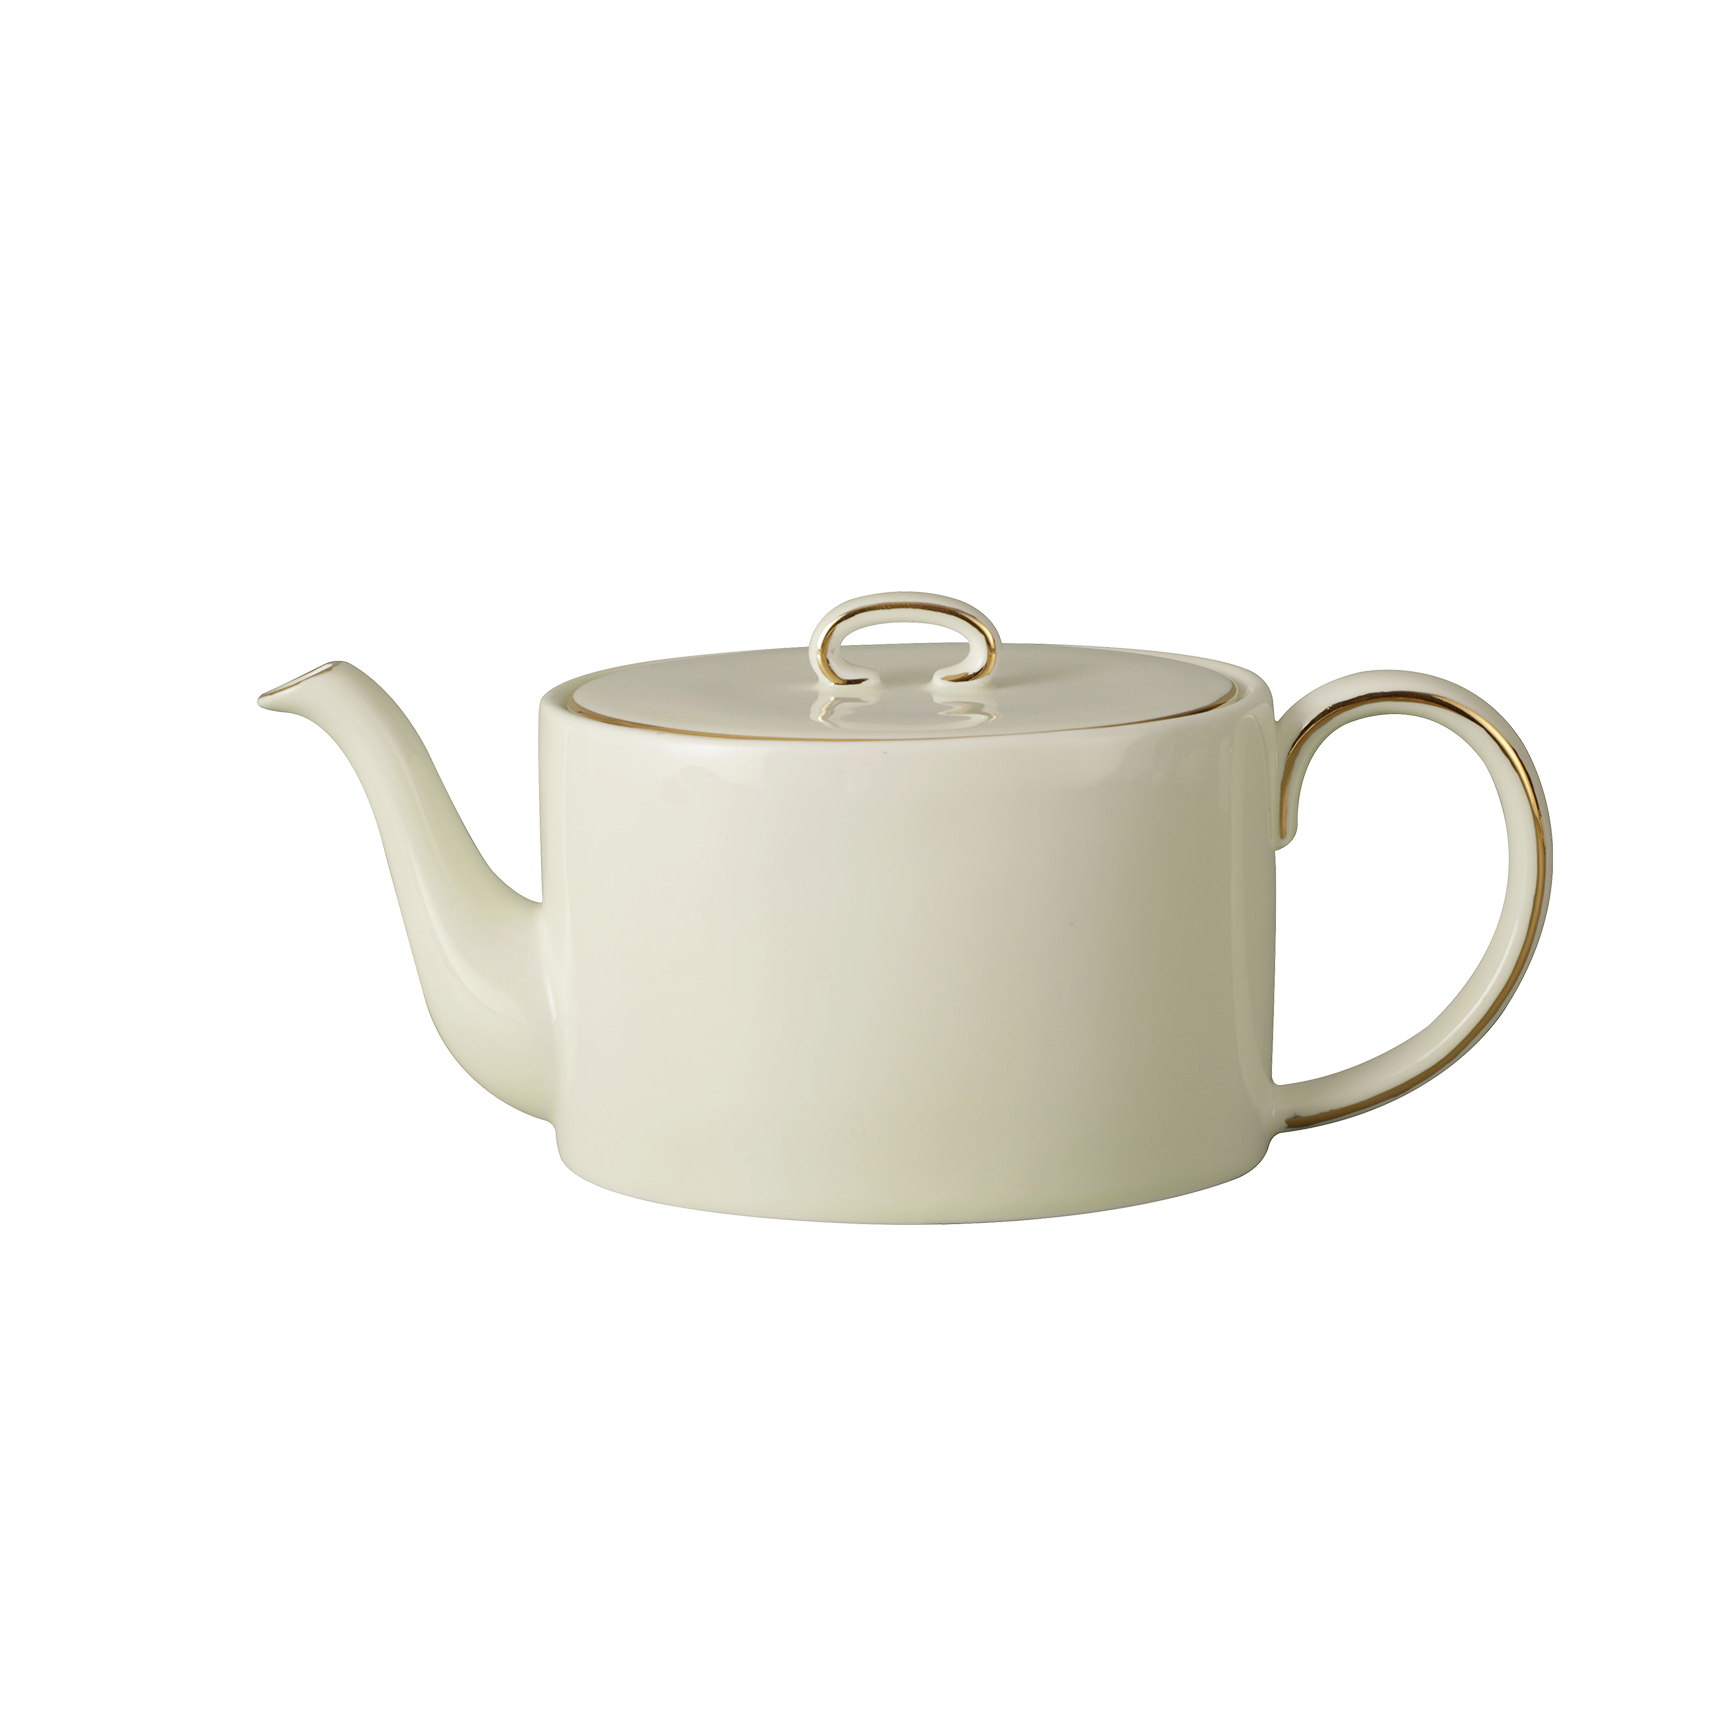 Tea pot set